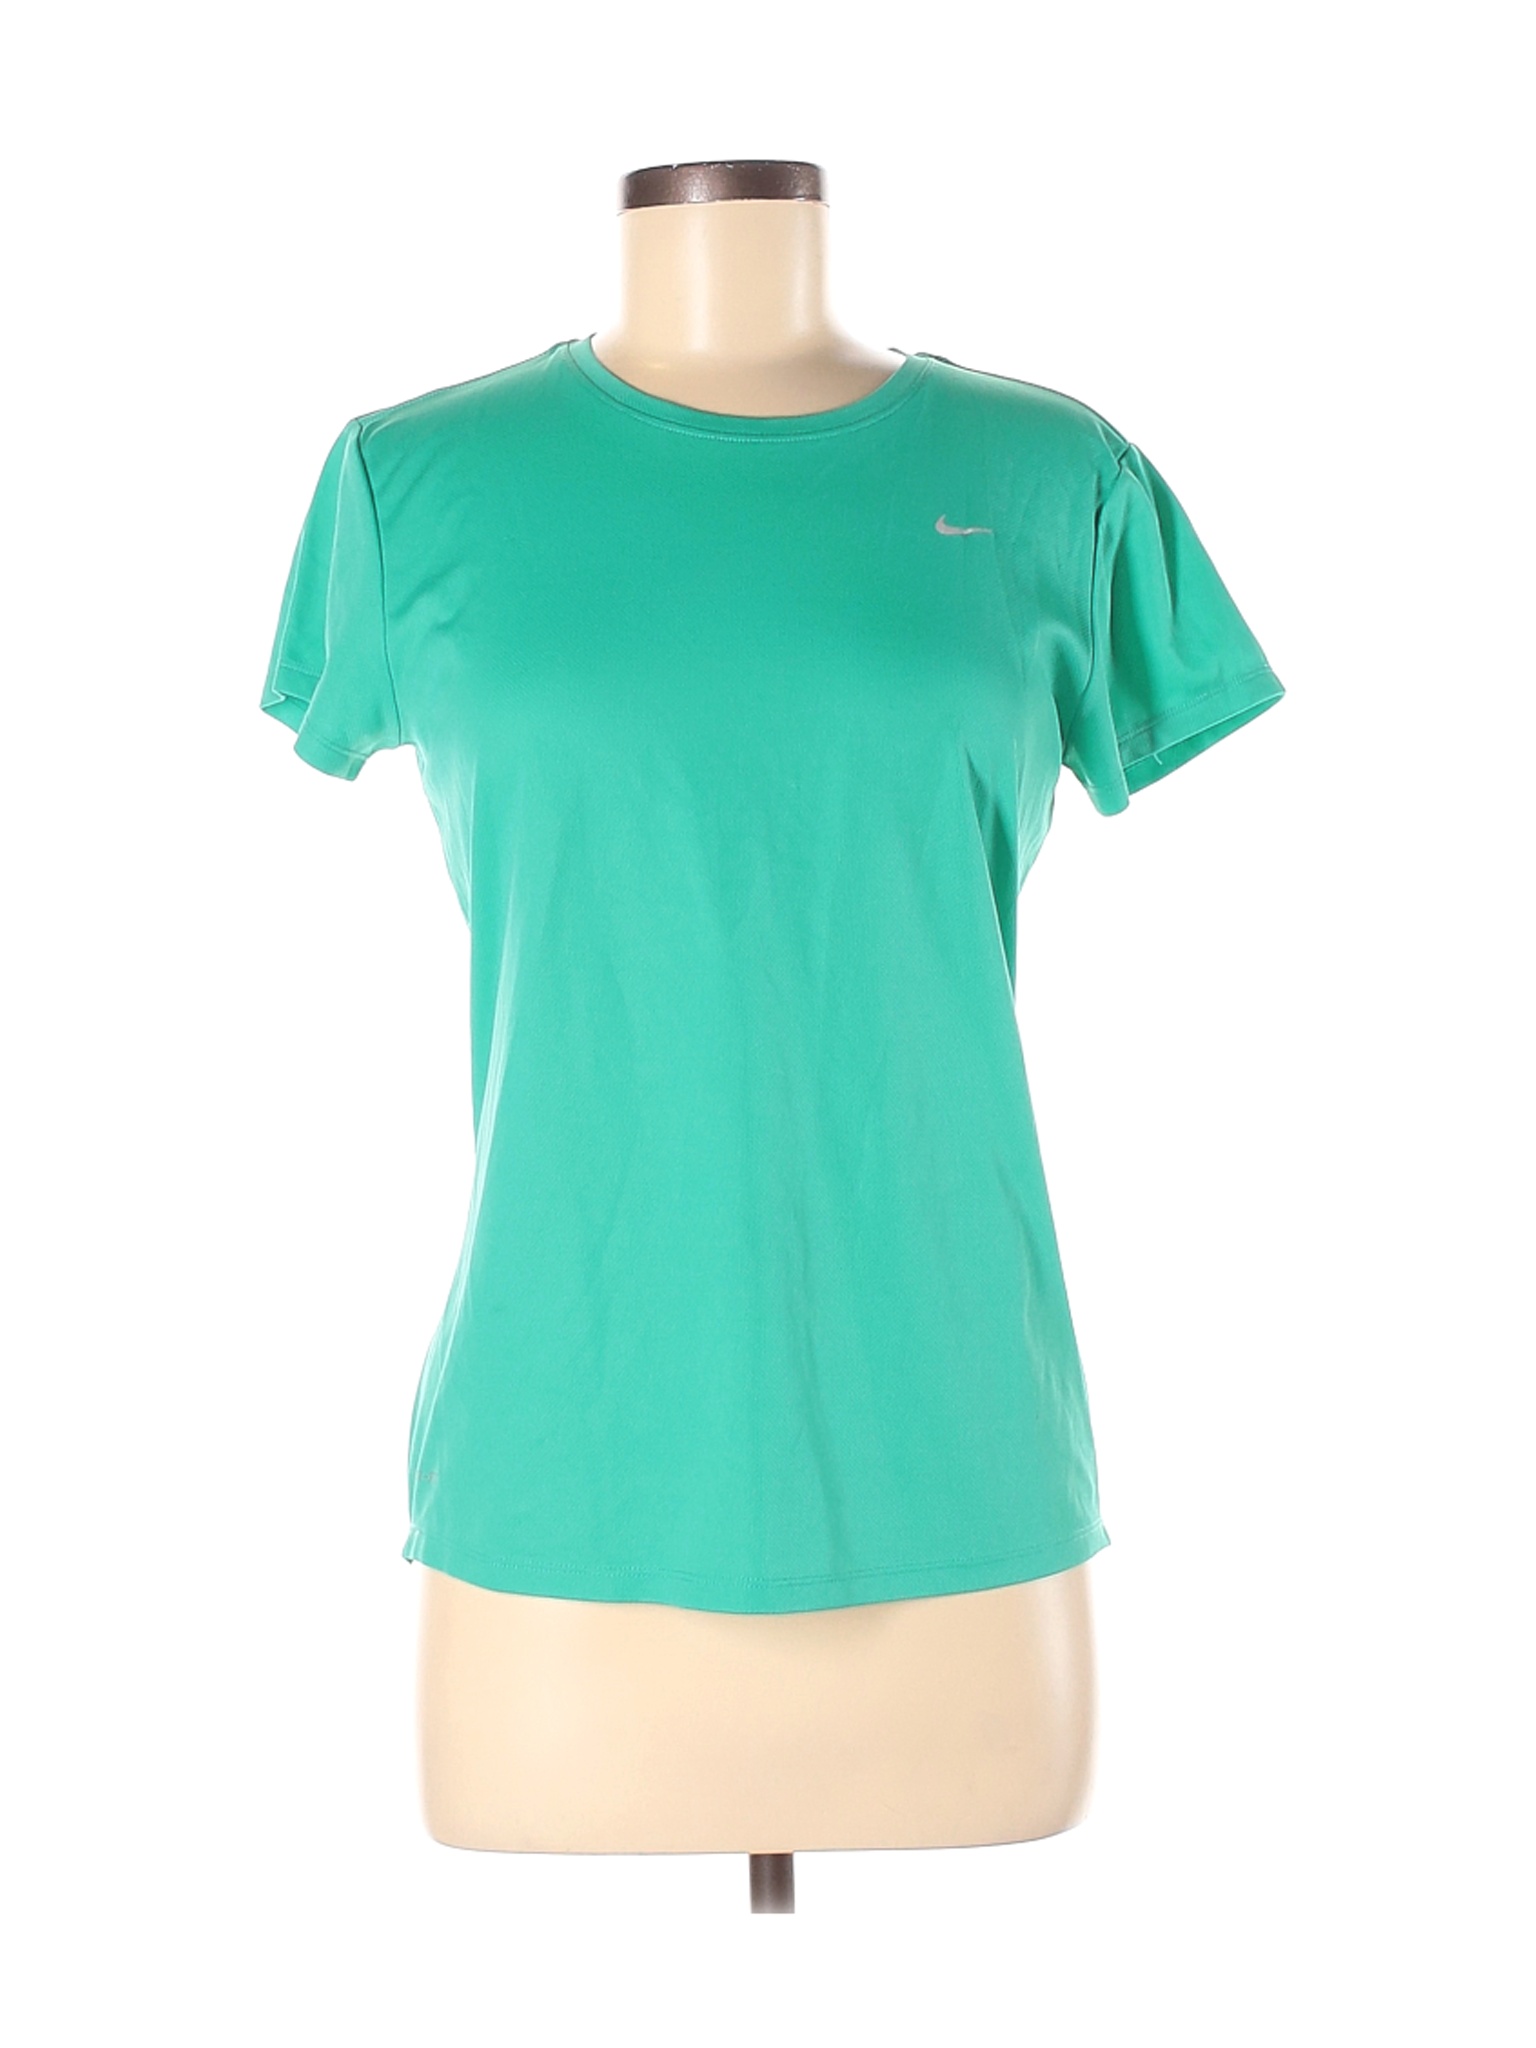 Nike Women Blue Active T-Shirt M | eBay